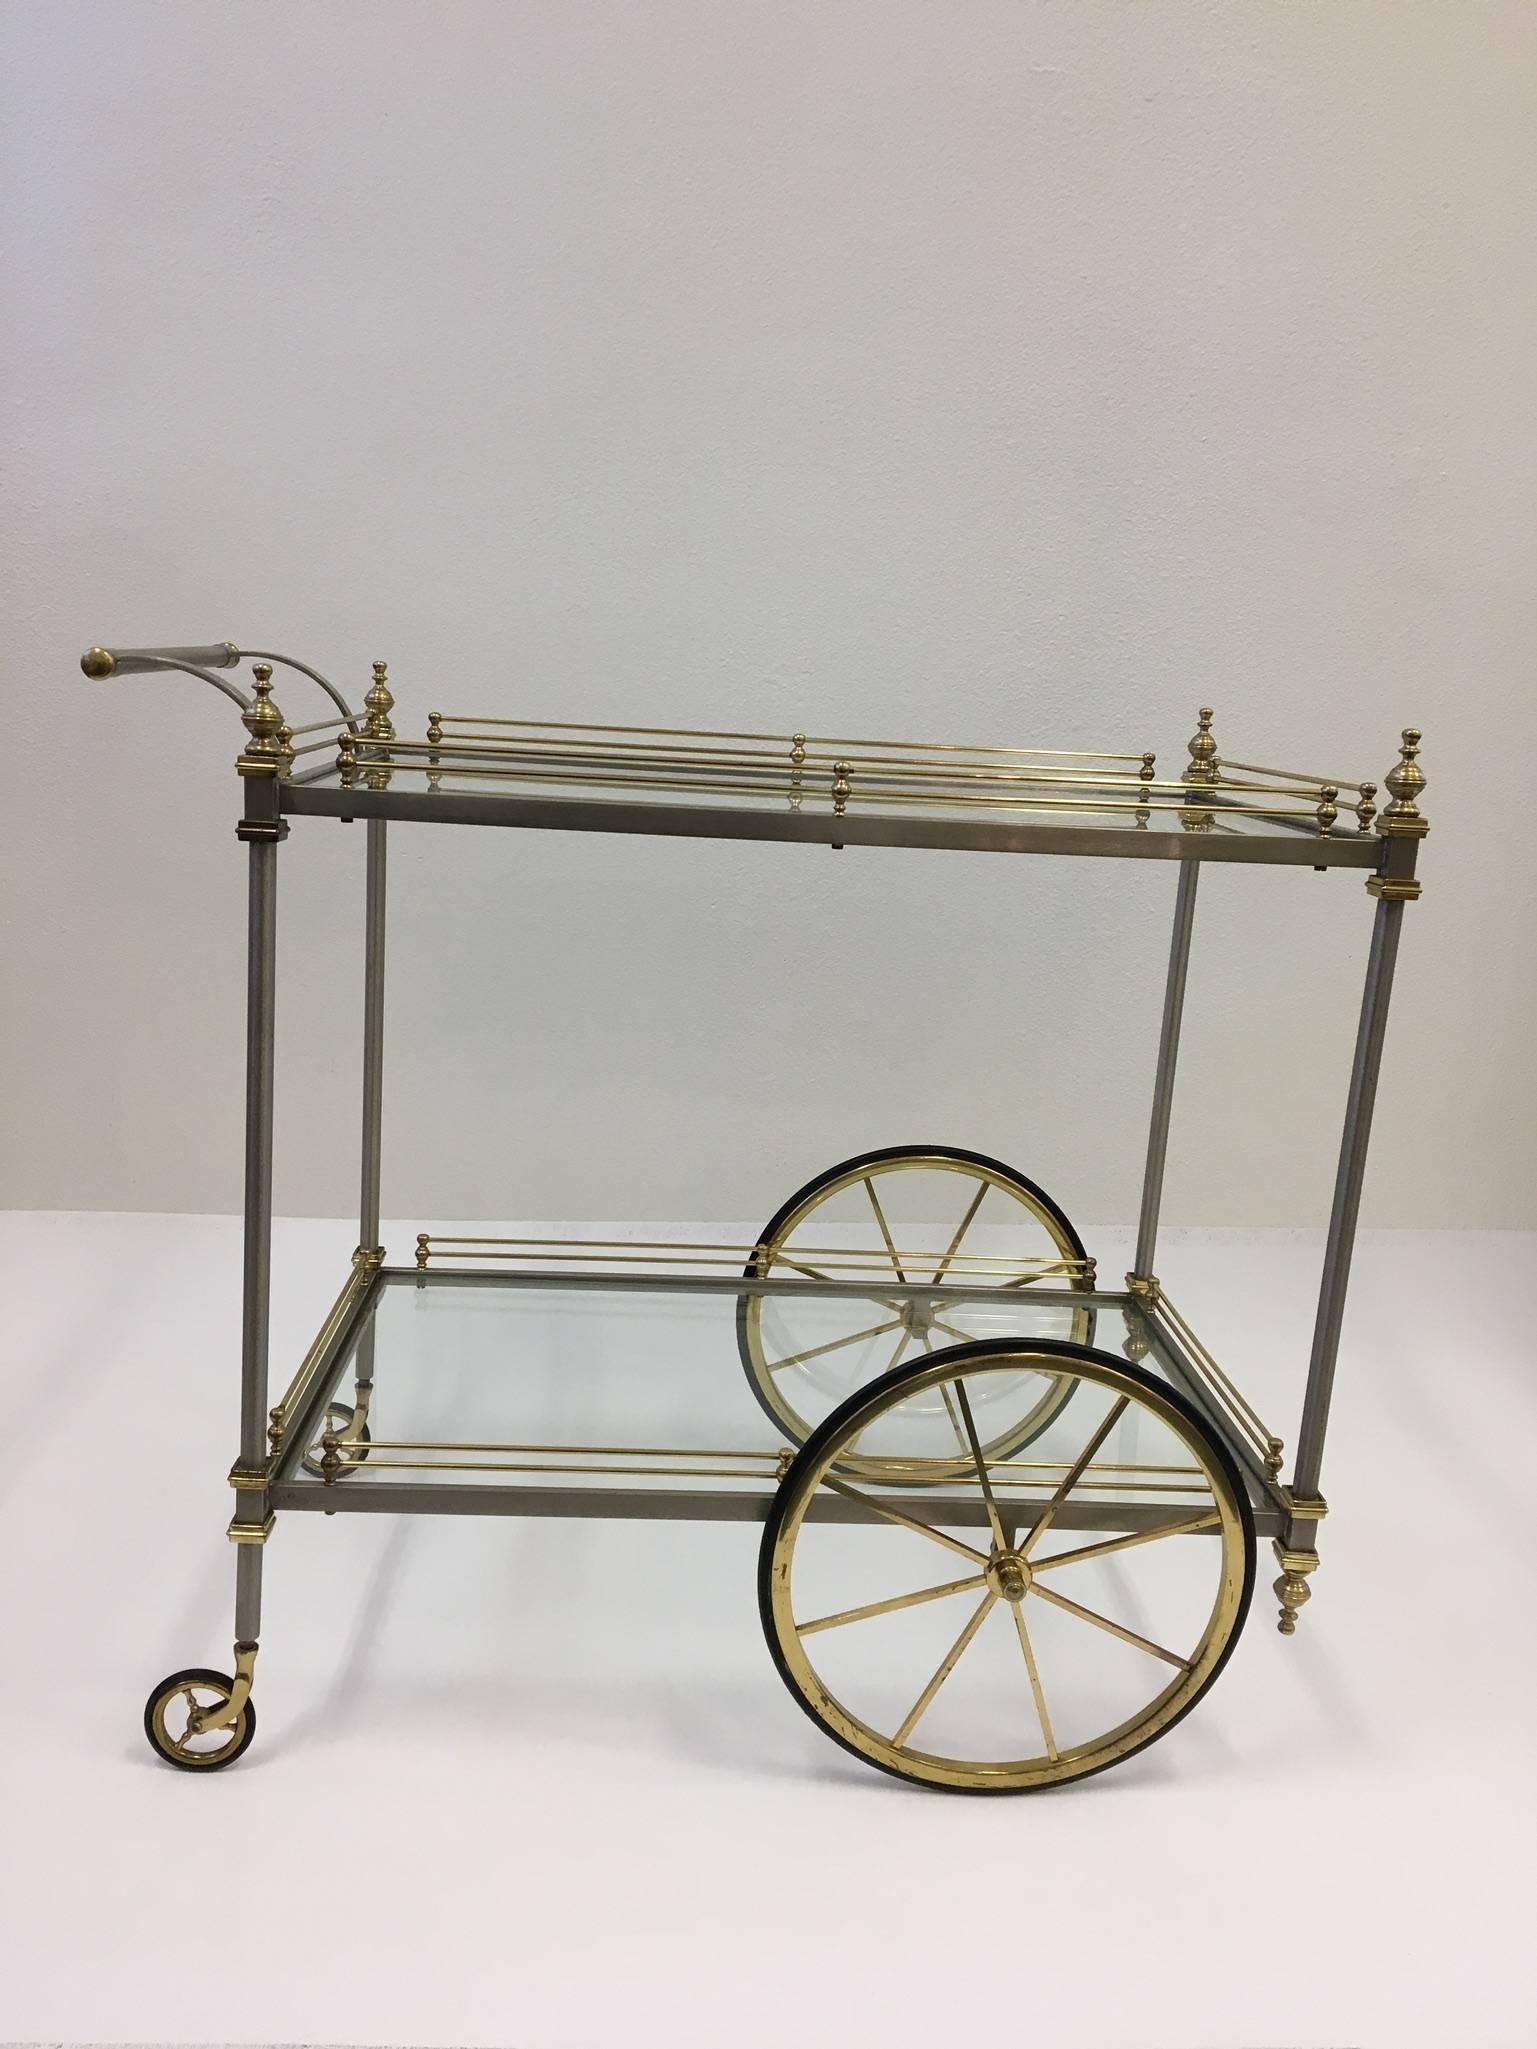 Hollywood Regency Italian Stainless Steel and Brass Bar Cart by Maison Jansen